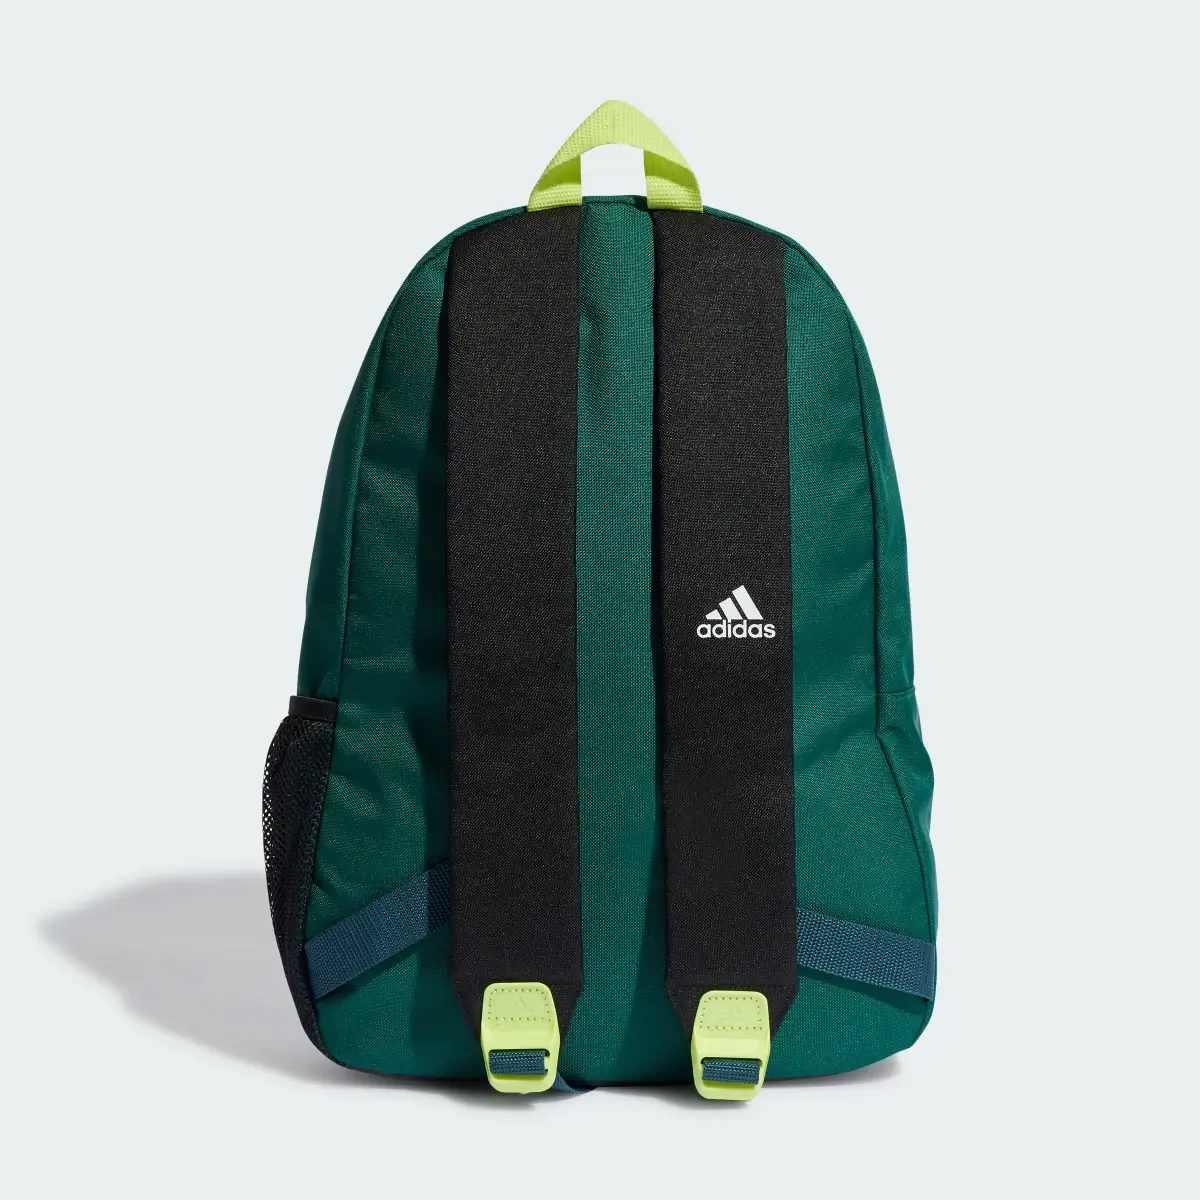 Adidas Brand Love Backpack. 3